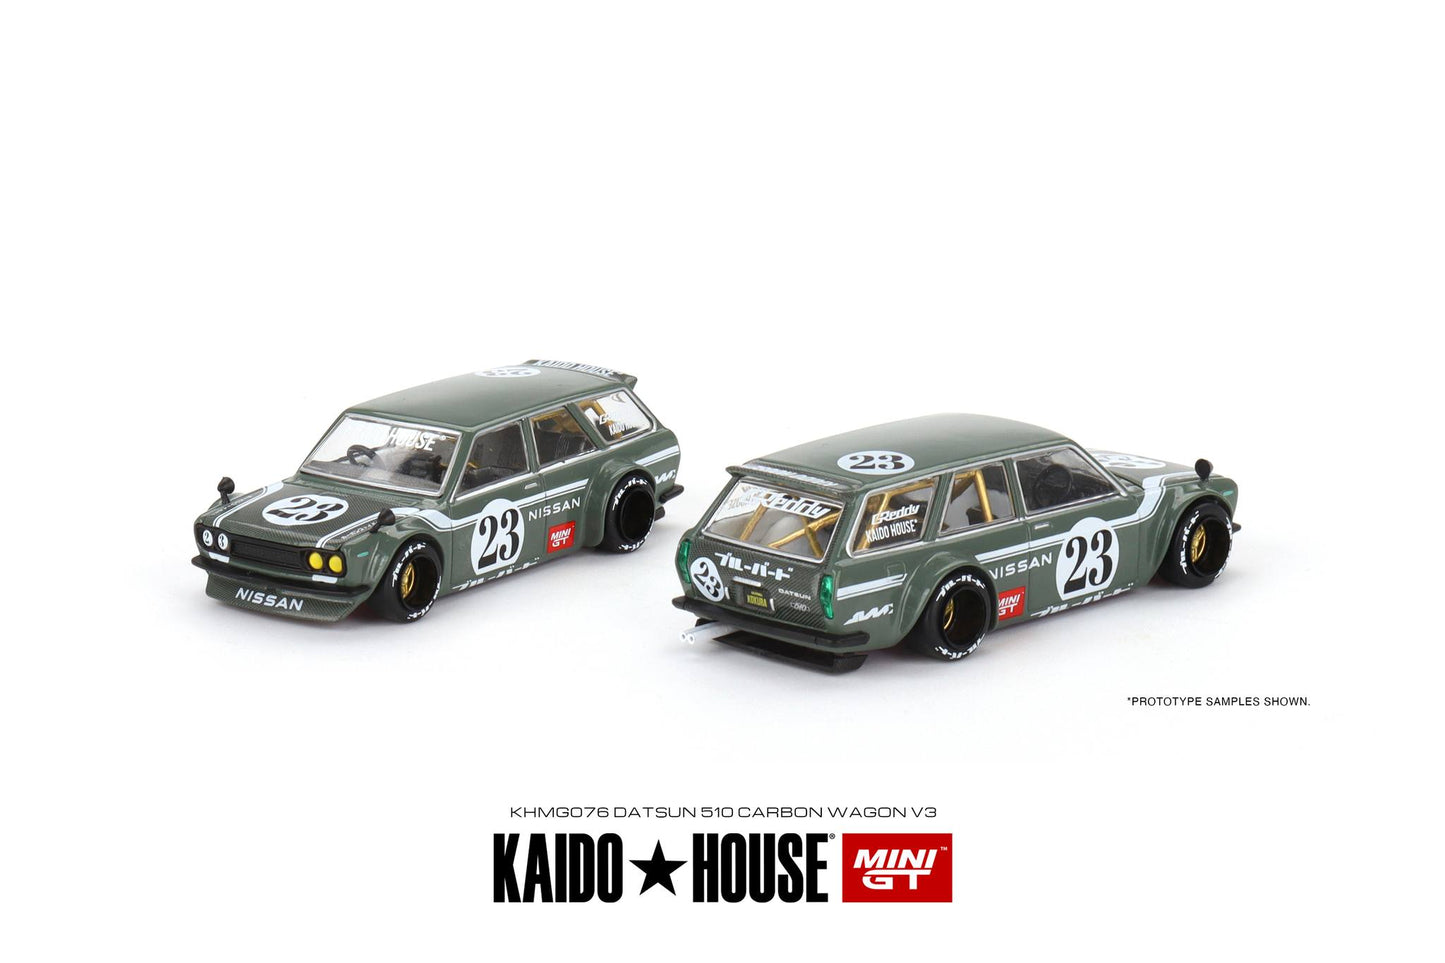 Mini GT x Kaido House Datsun 510 Carbon Fiber V3 in Green